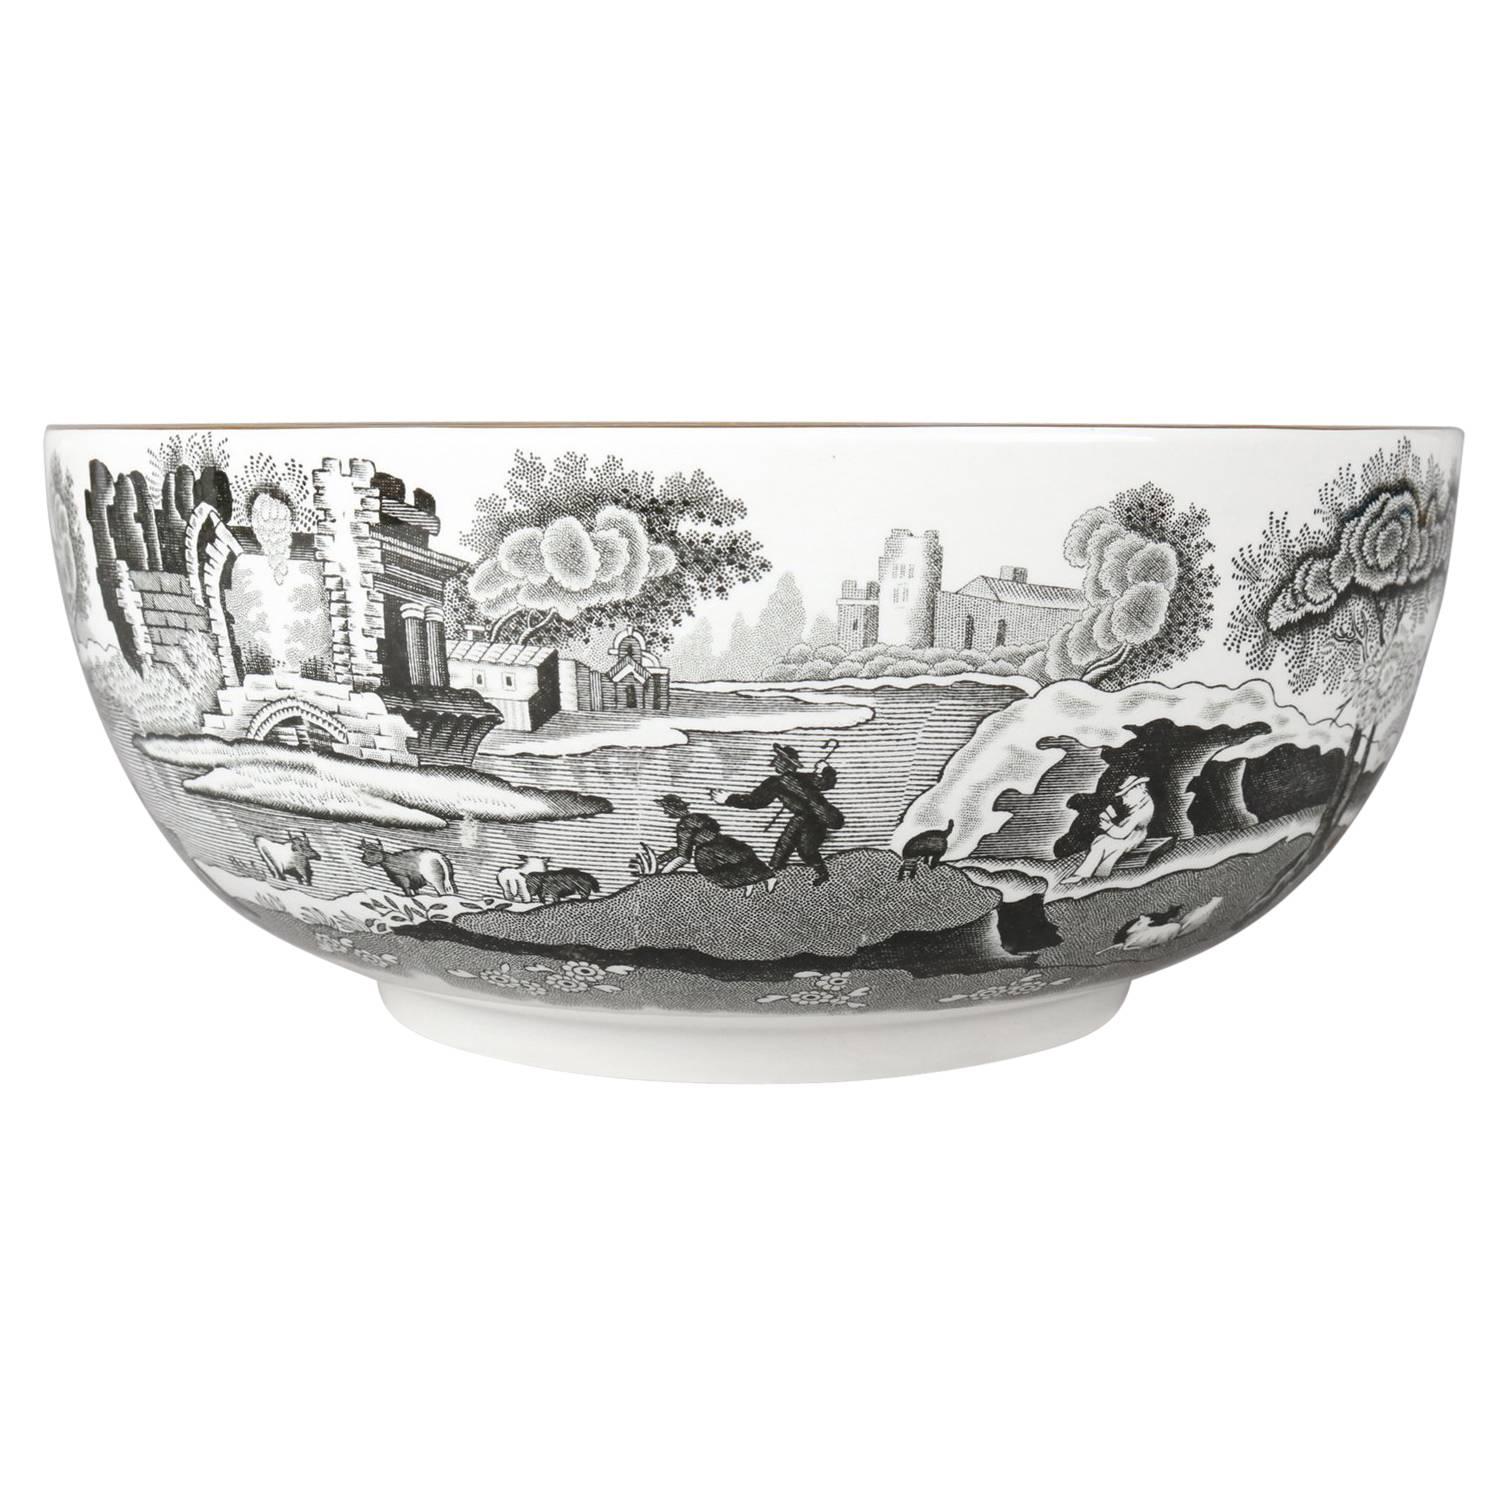 English Porcelain Black Transfer Ware Serving Bowl by Spode with Gilt Trim